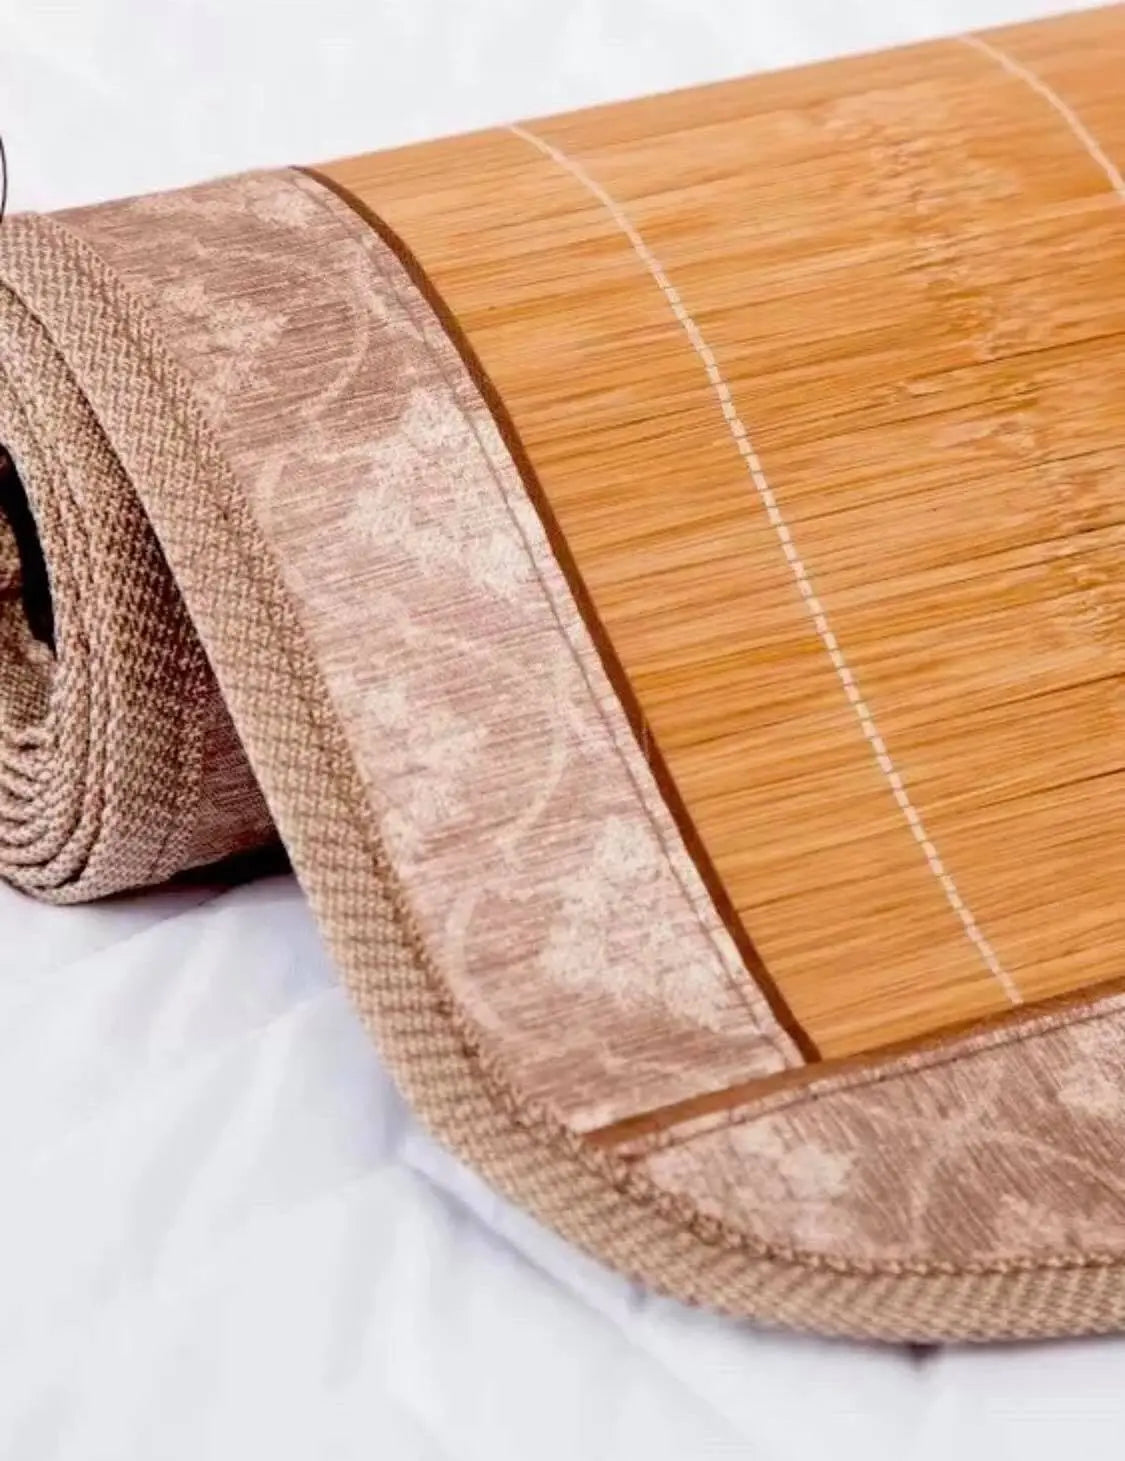 Bamboo Mat Mattress Topper Foldable Premium Both Sides With 2 Pillow Cases 双面高级折叠碳化竹席竹凉席+2 枕套 everythingbamboo